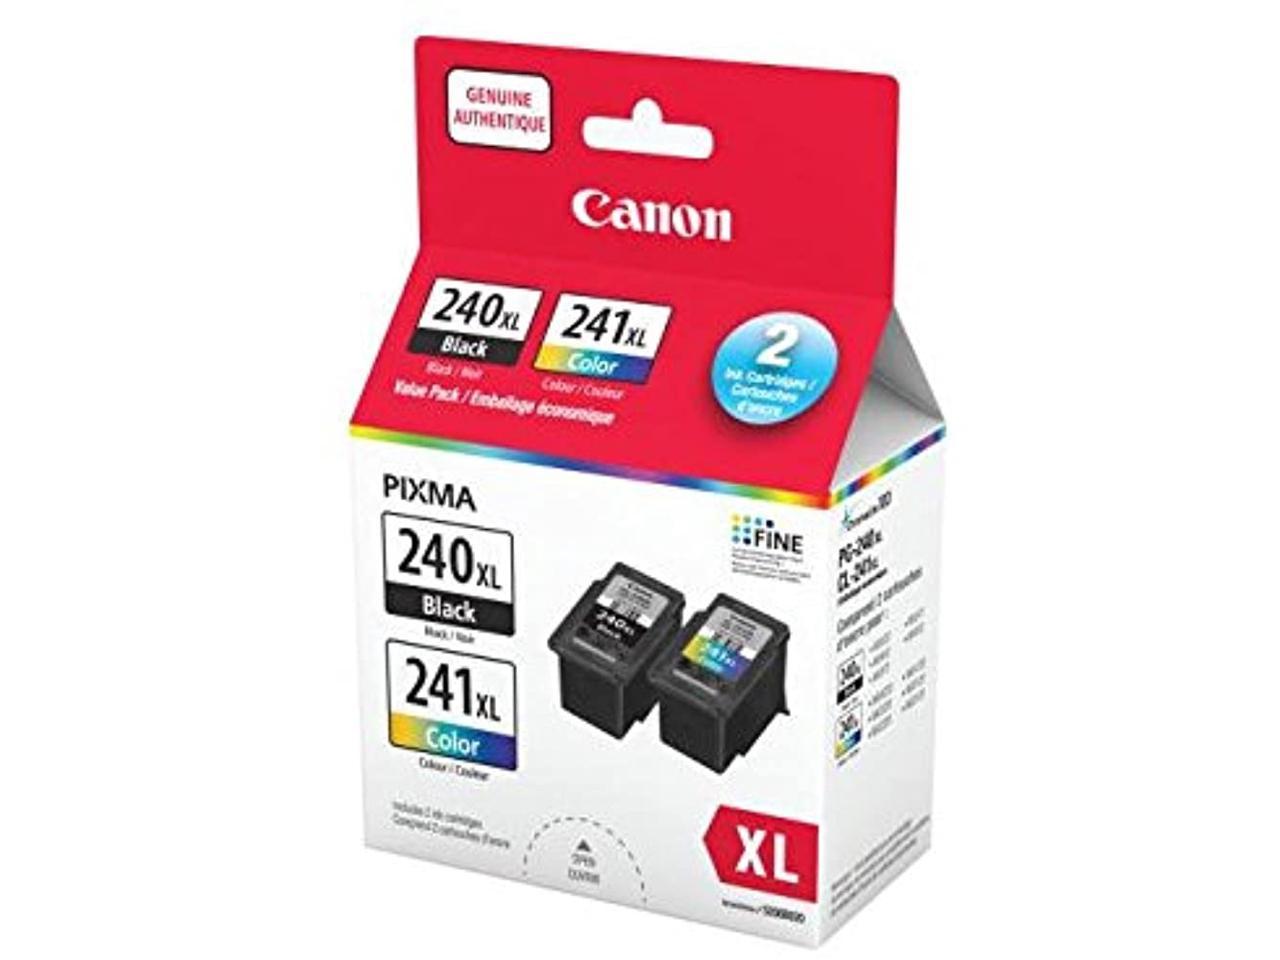 Canon Pg 240xlcl 241xl Ink Cartridge Blackcolor 2pack 5206b020 3737